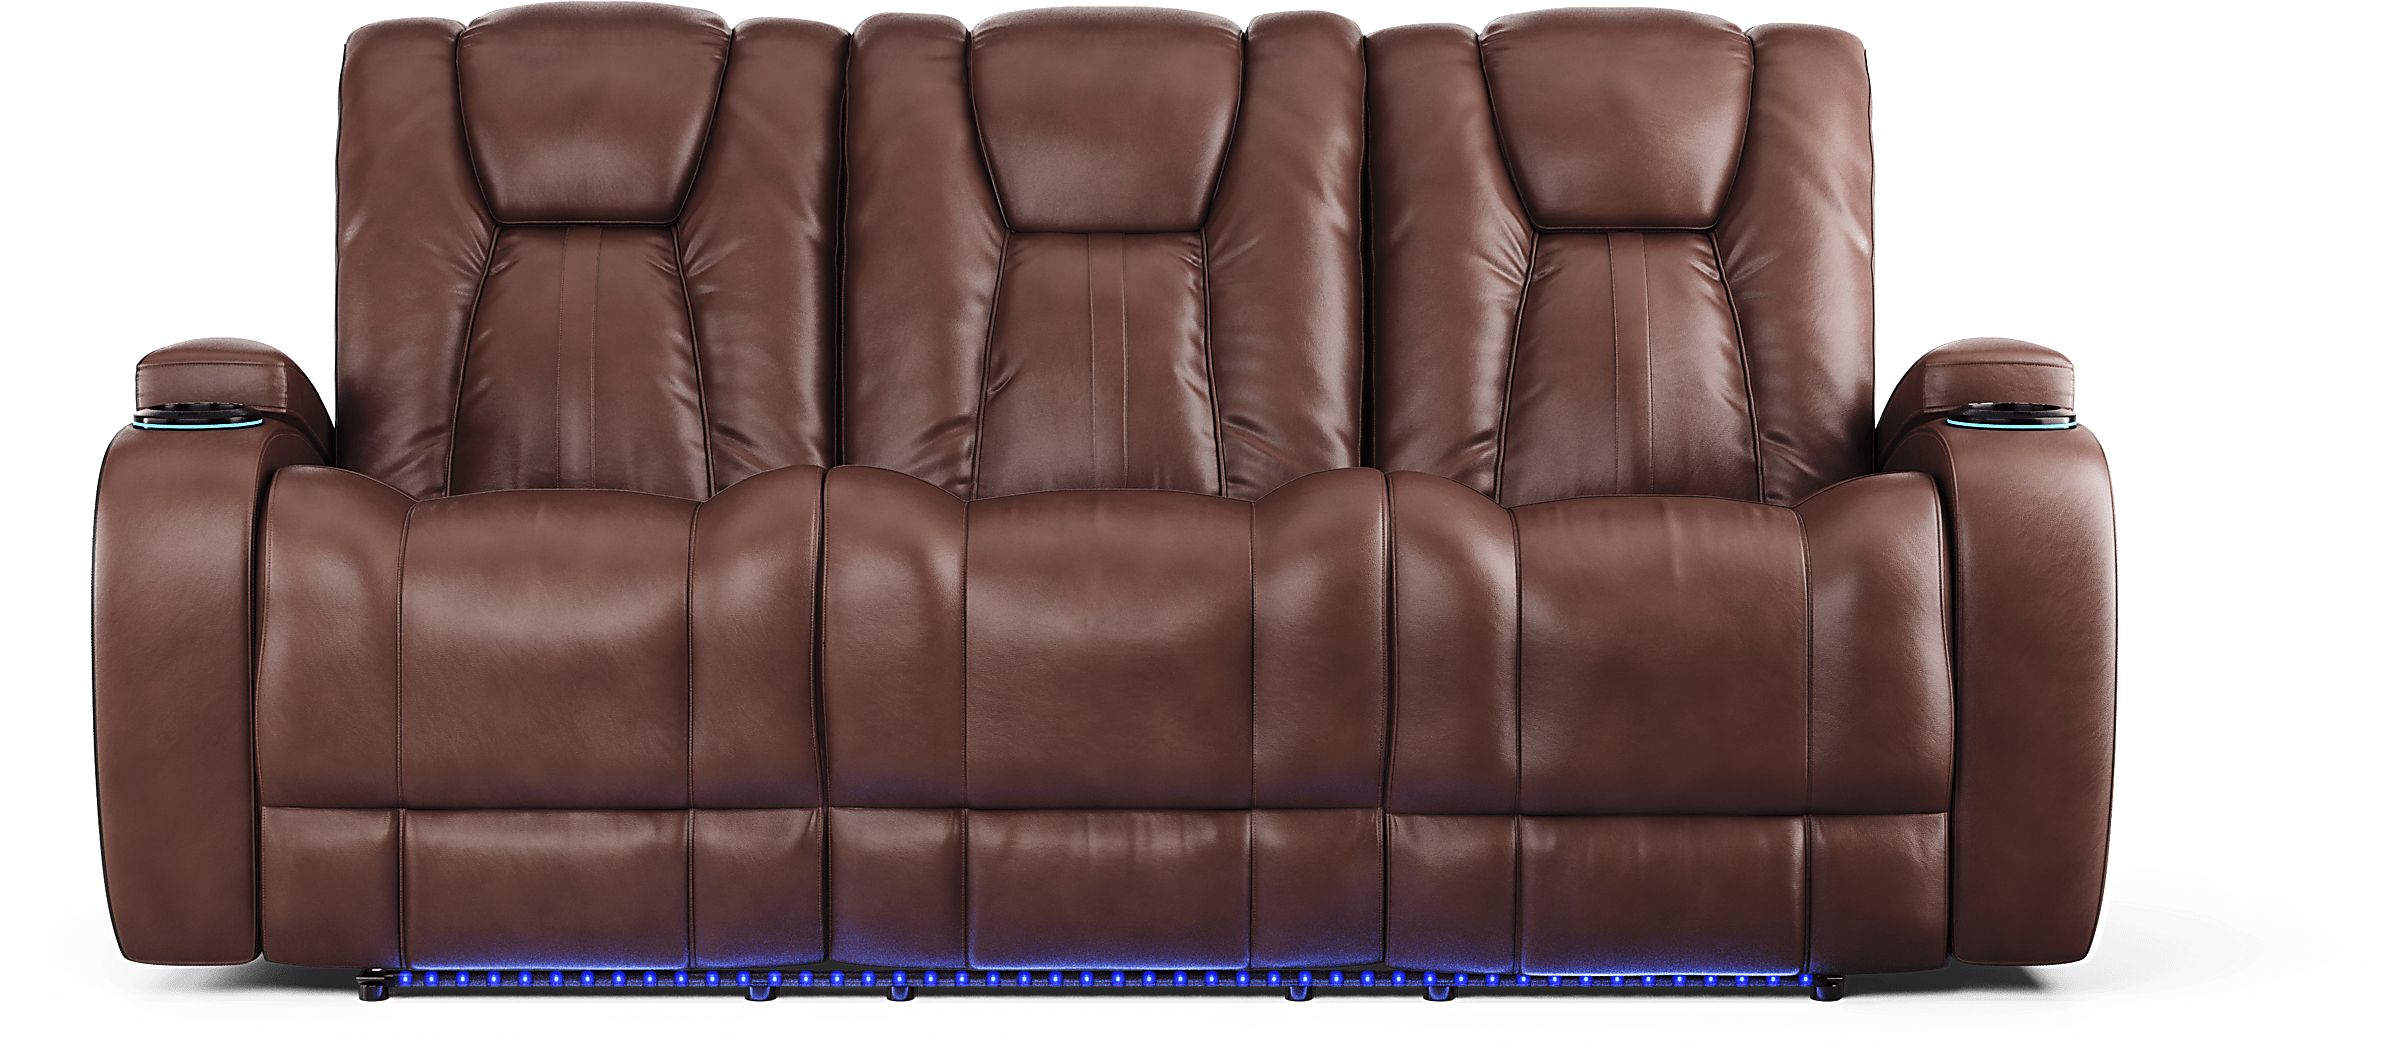 Dual Power Reclining Sofa